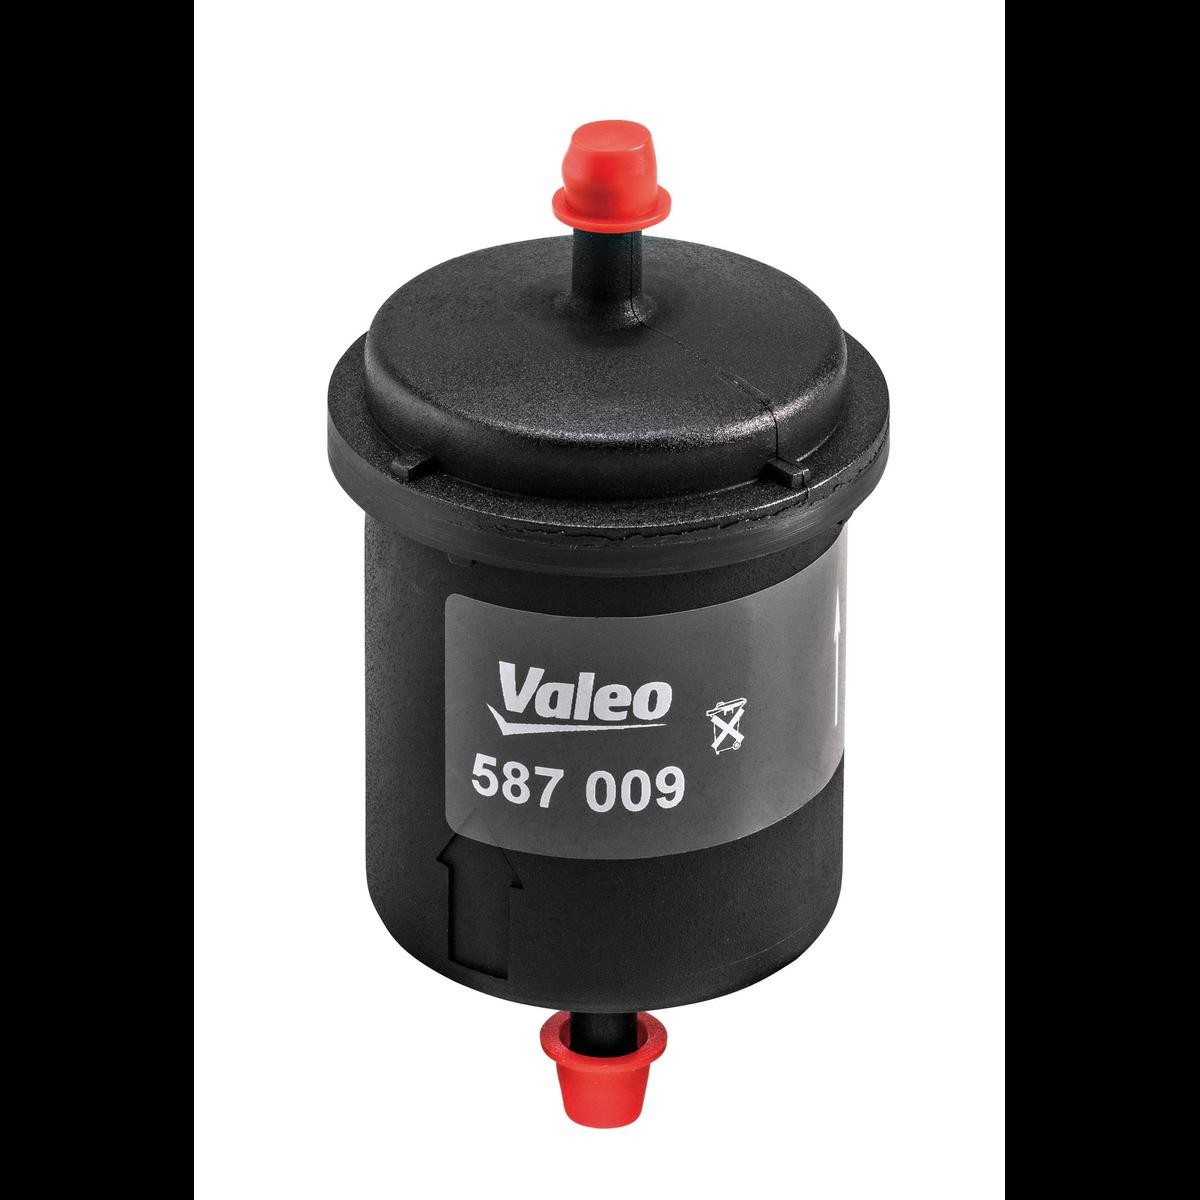 VALEO 587009 Fuel filter In-Line Filter